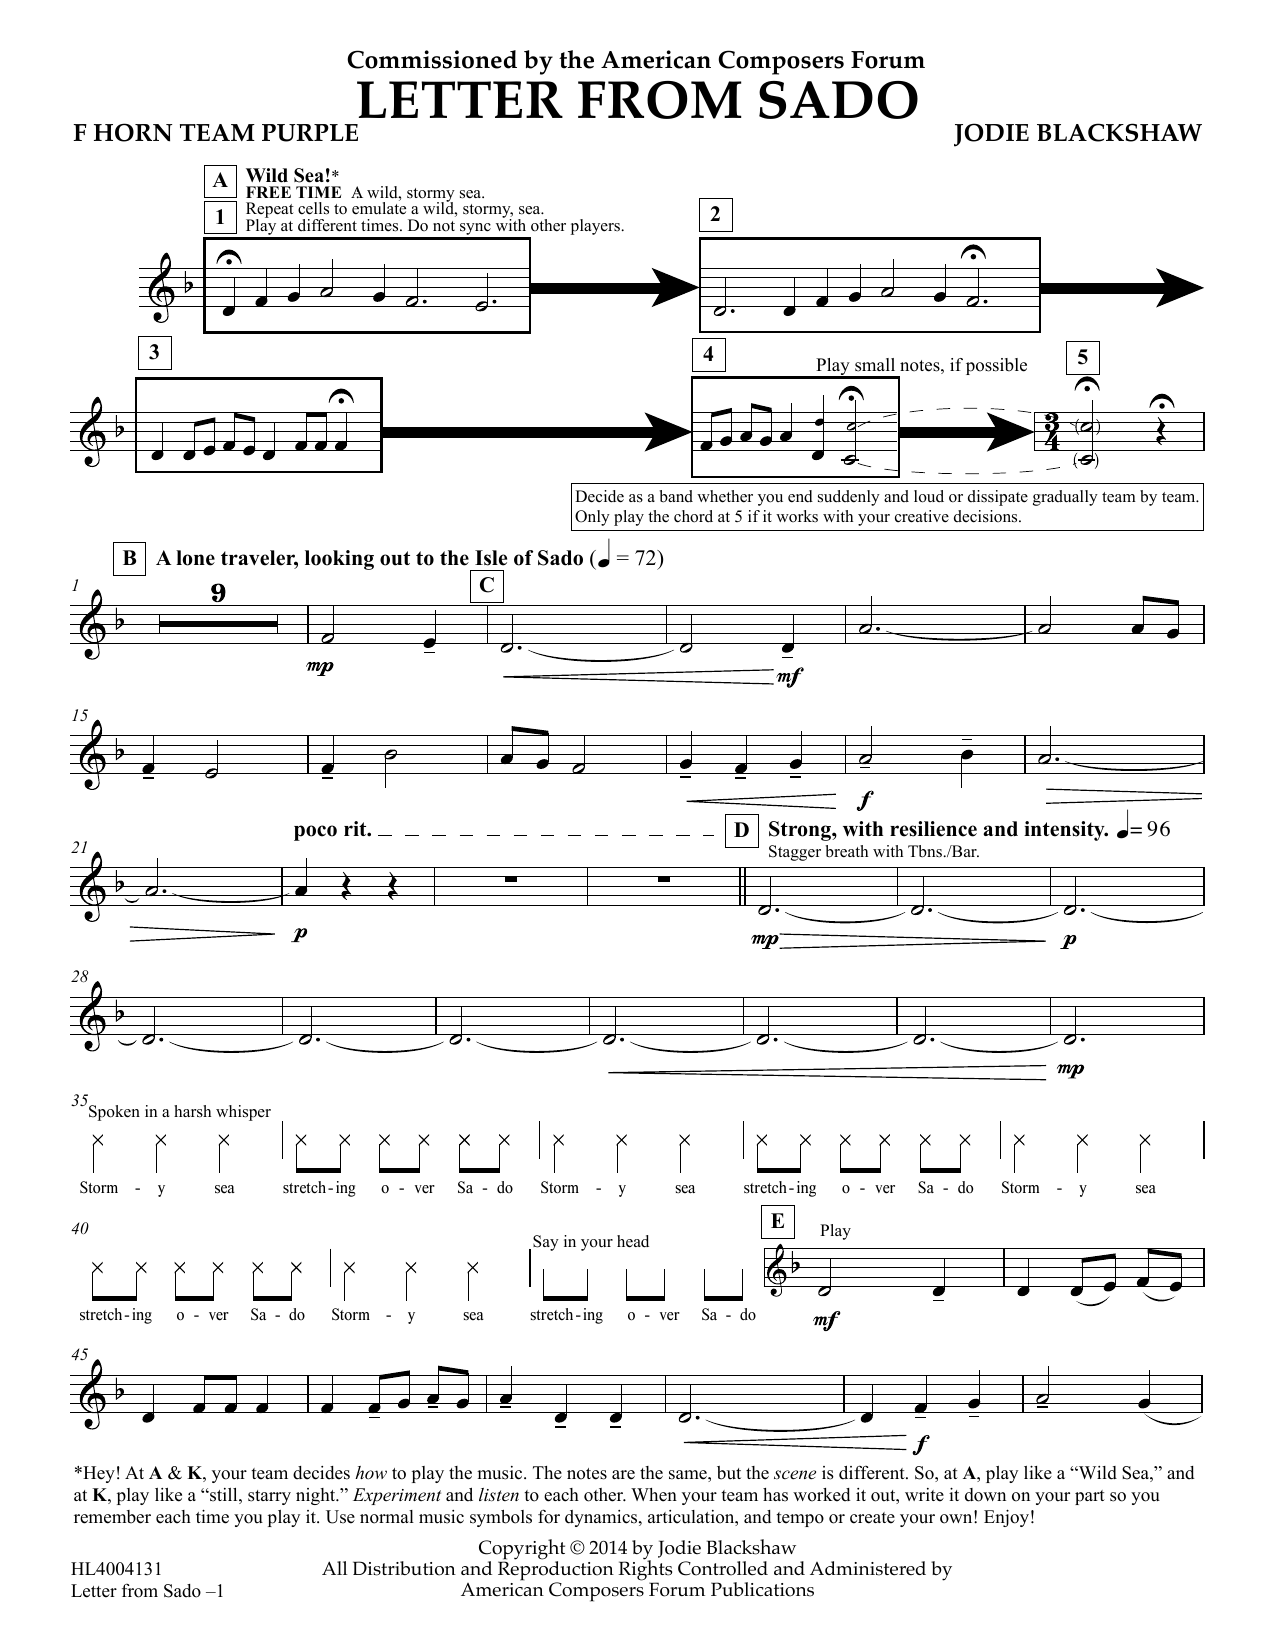 Jodie Blackshaw Letter from Sado - F Horn Team Purple Sheet Music Notes & Chords for Concert Band - Download or Print PDF